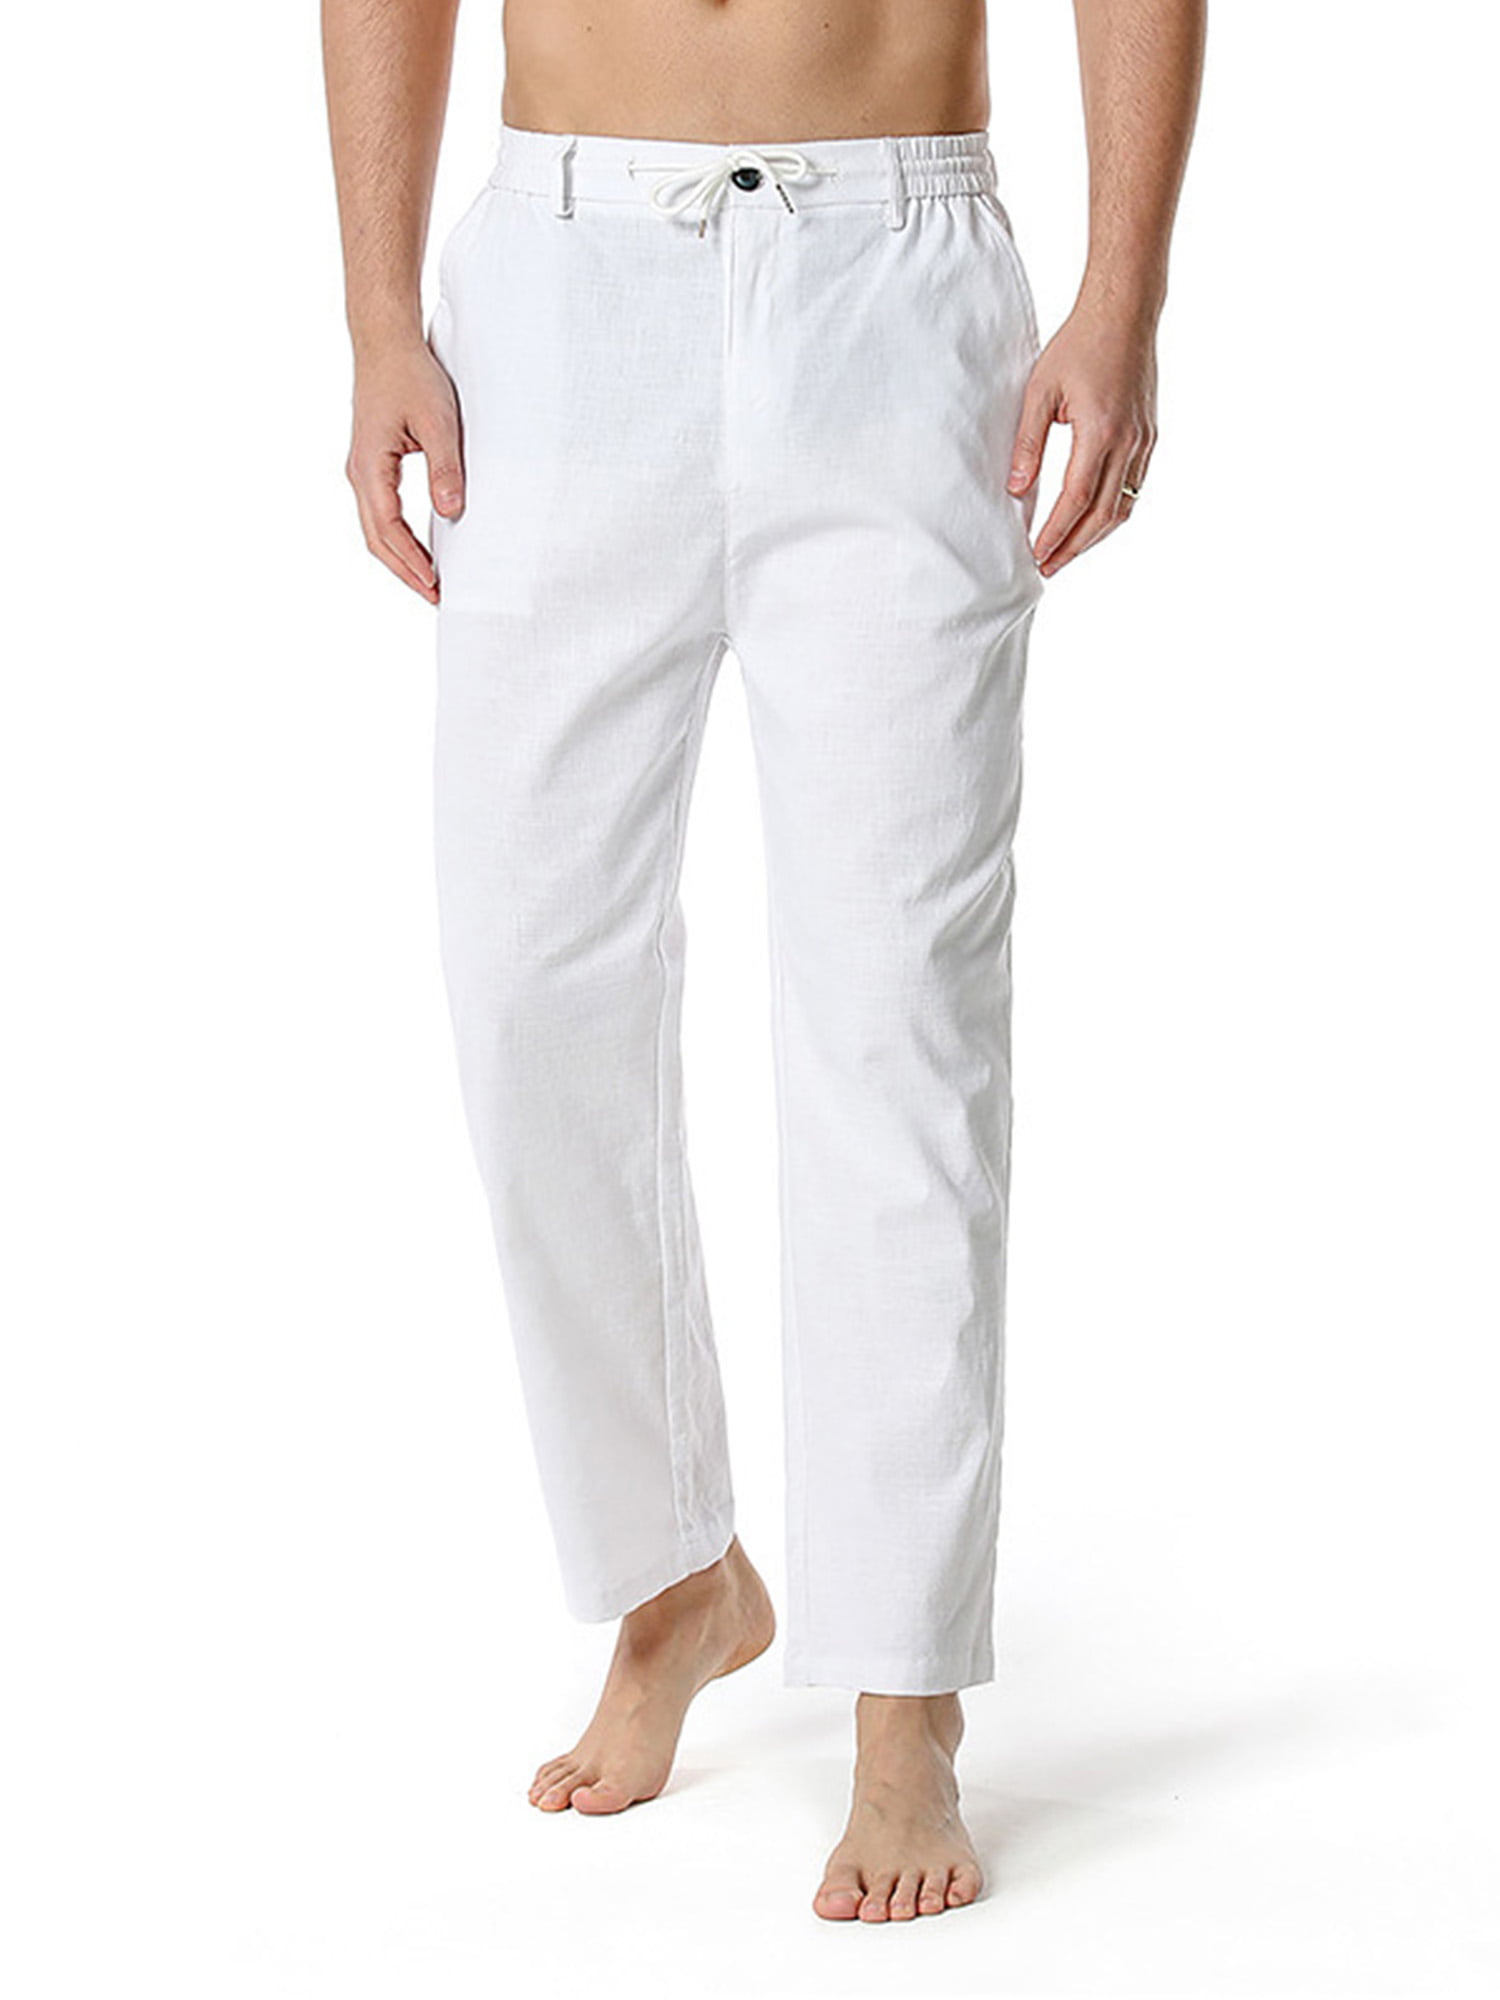 Summer Men Linen Loose Leisure Pants Elastic Waist Beach Casual Shorts Grey Blue